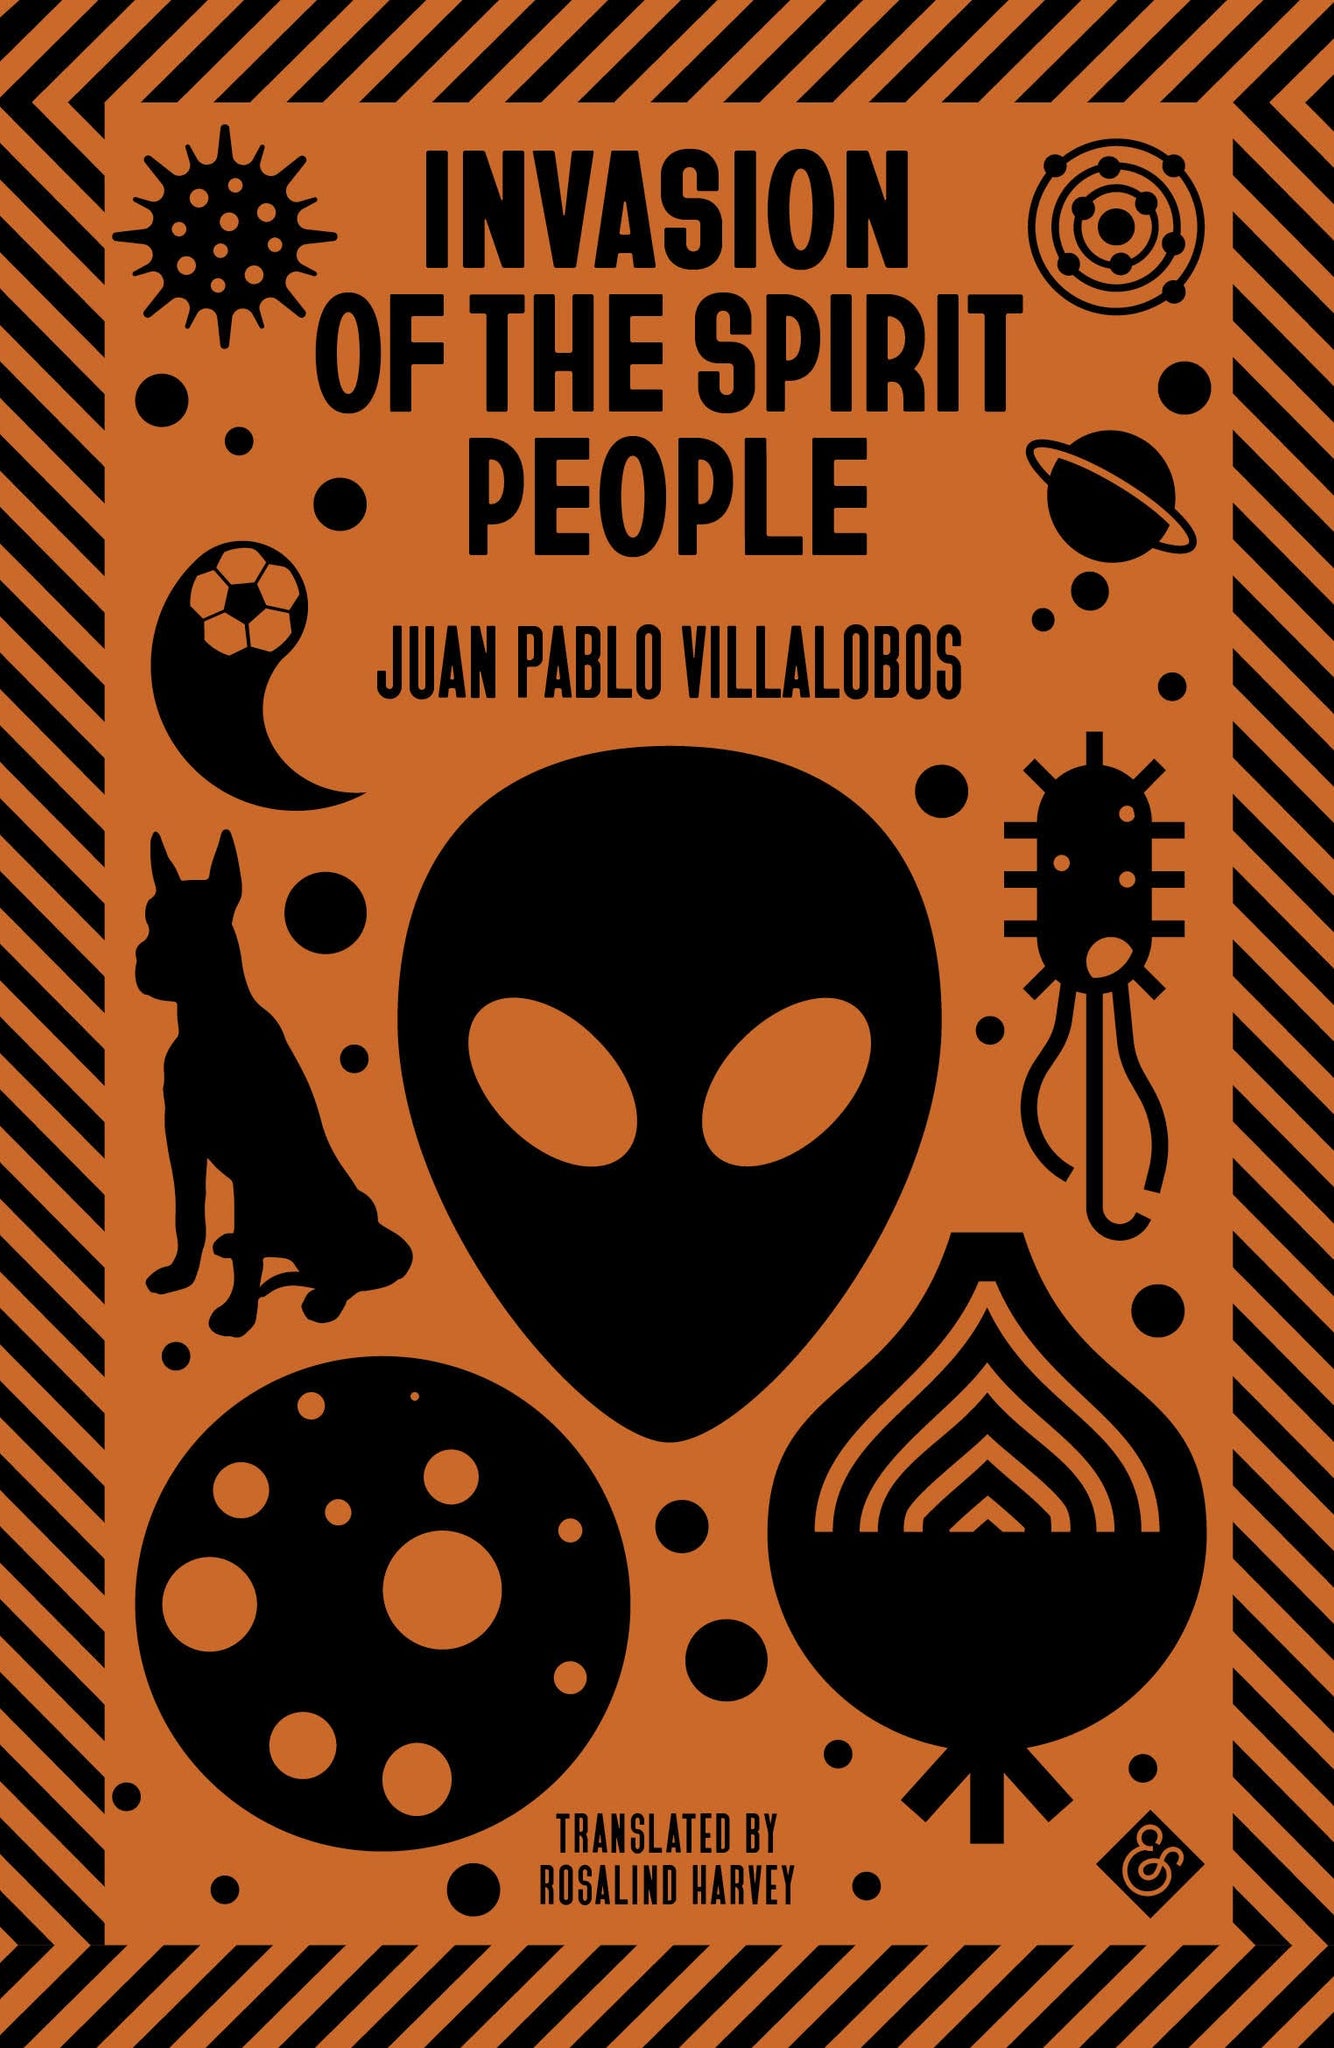 Invasion of the Spirit People by Juan Pablo Villalobos